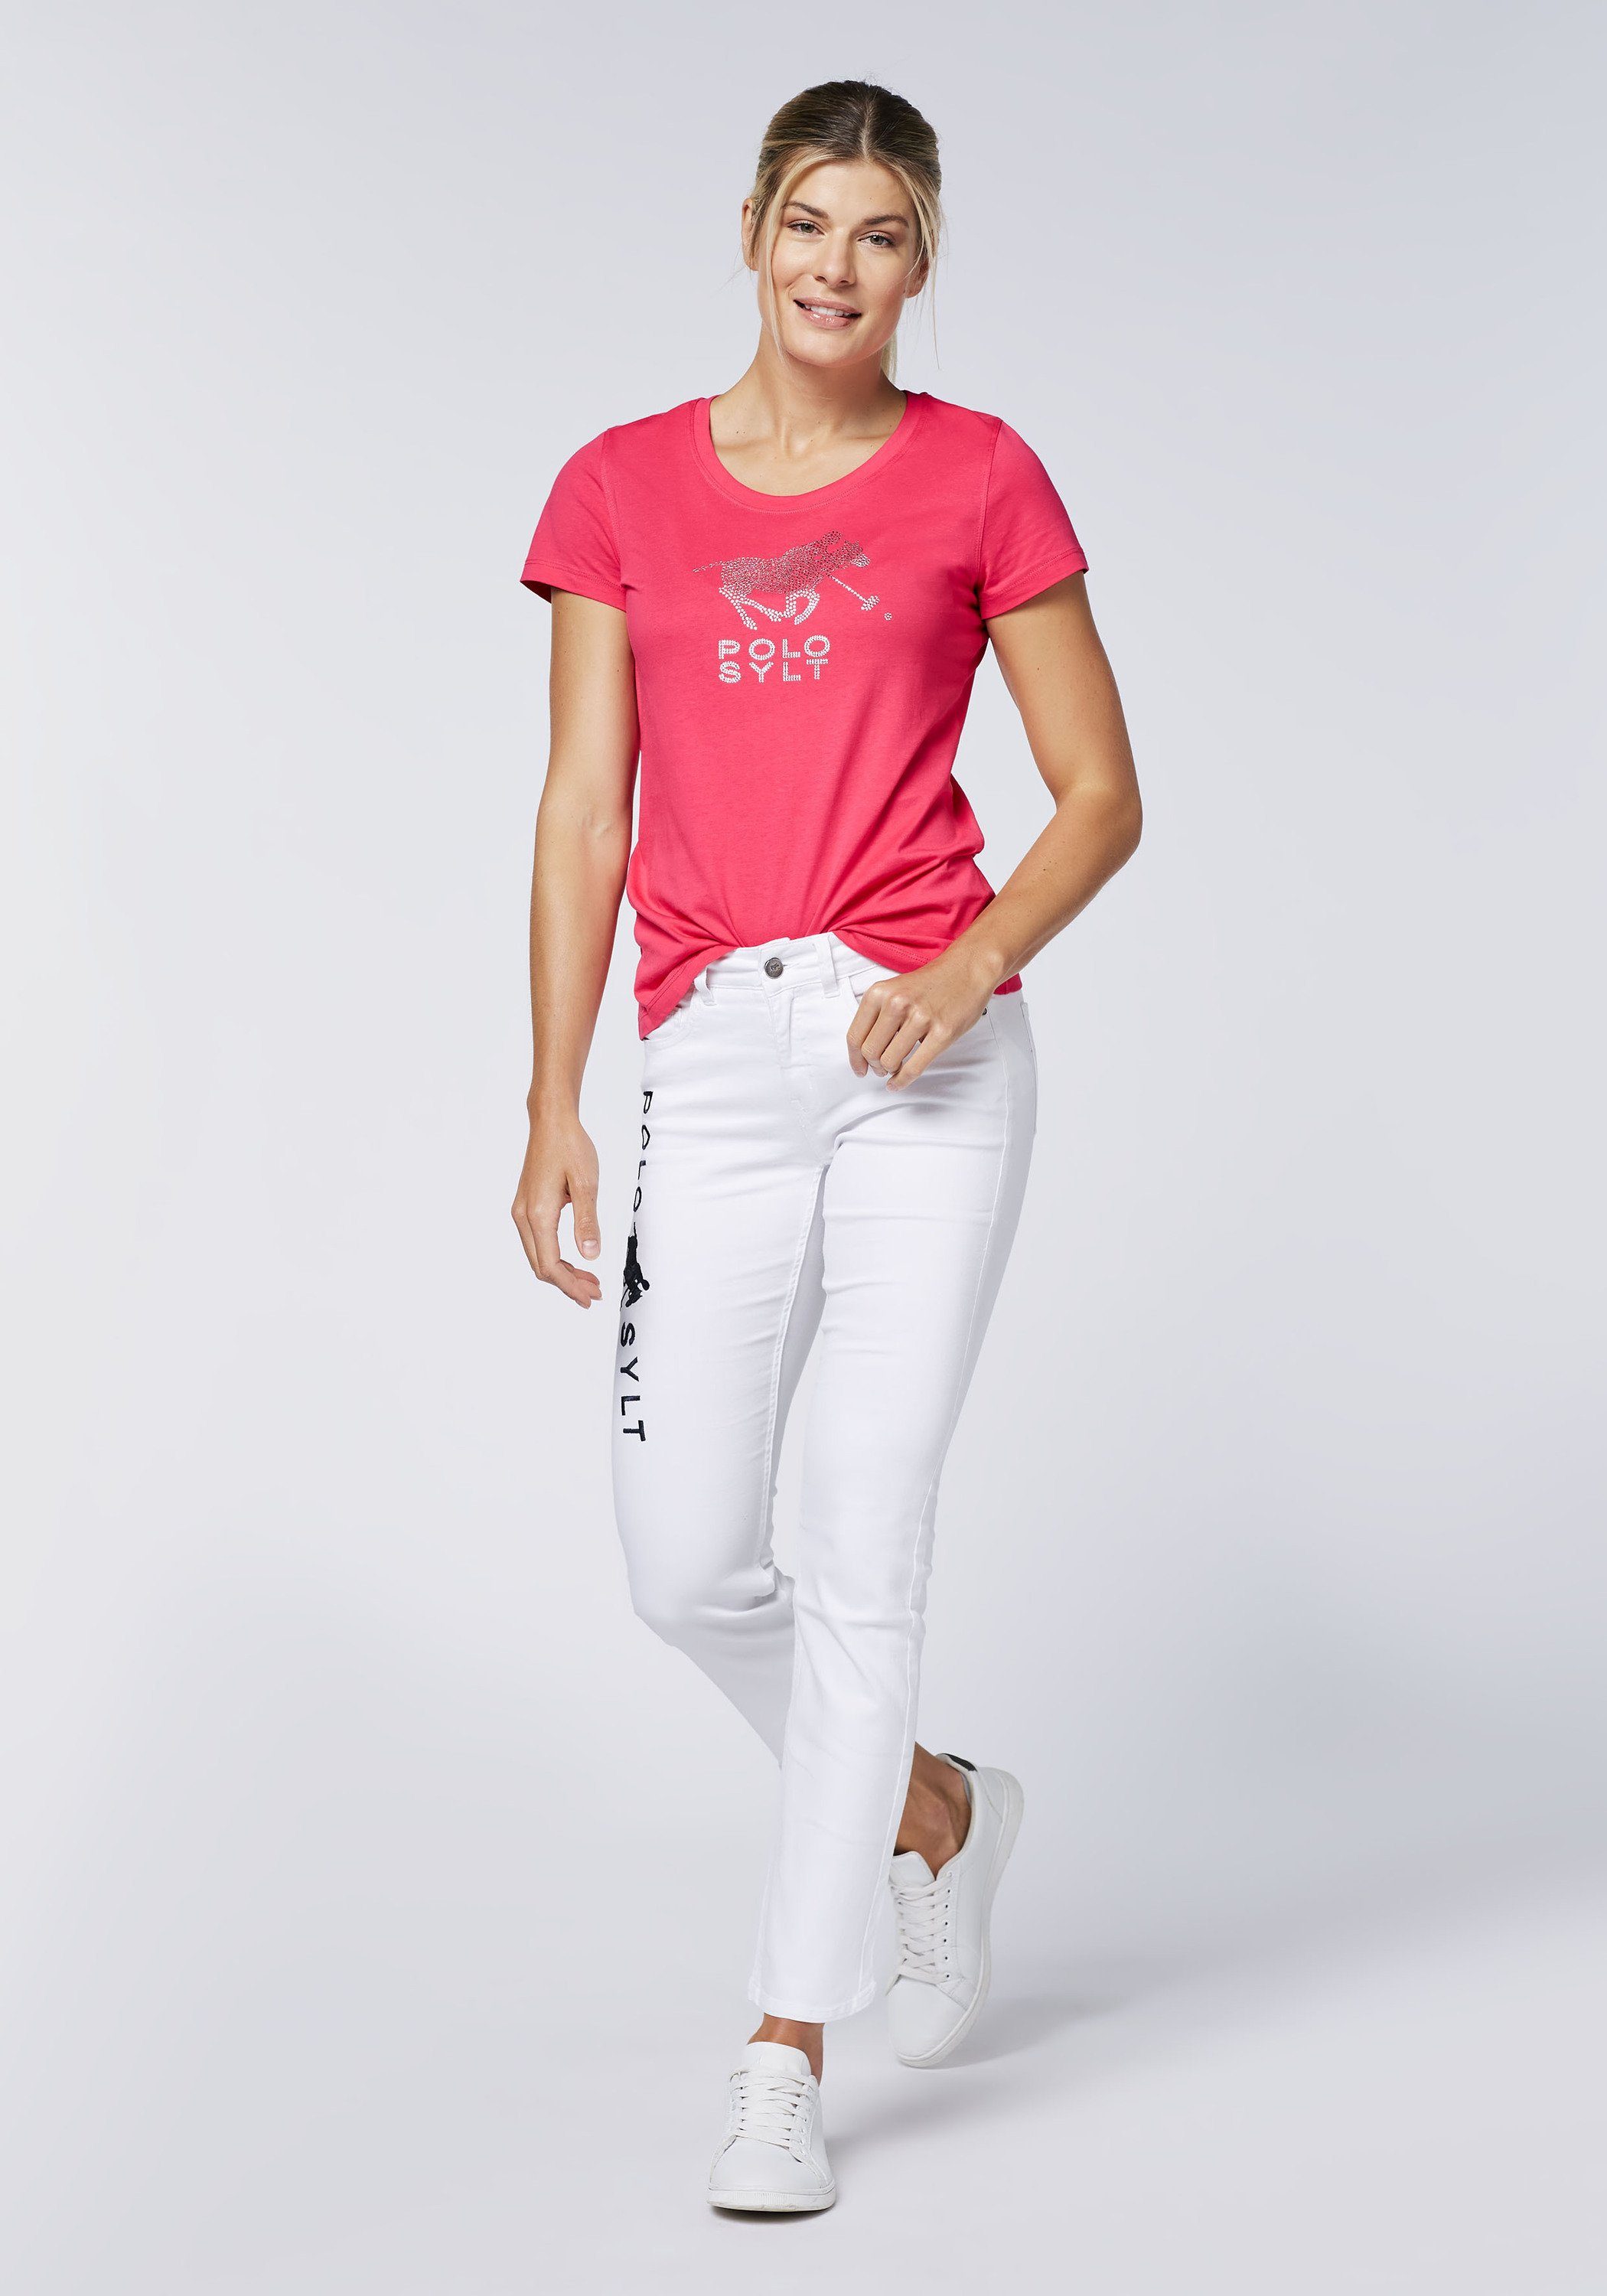 Sylt Raspberry T-Shirt Polo mit edlen 18-1754 Strasssteinen